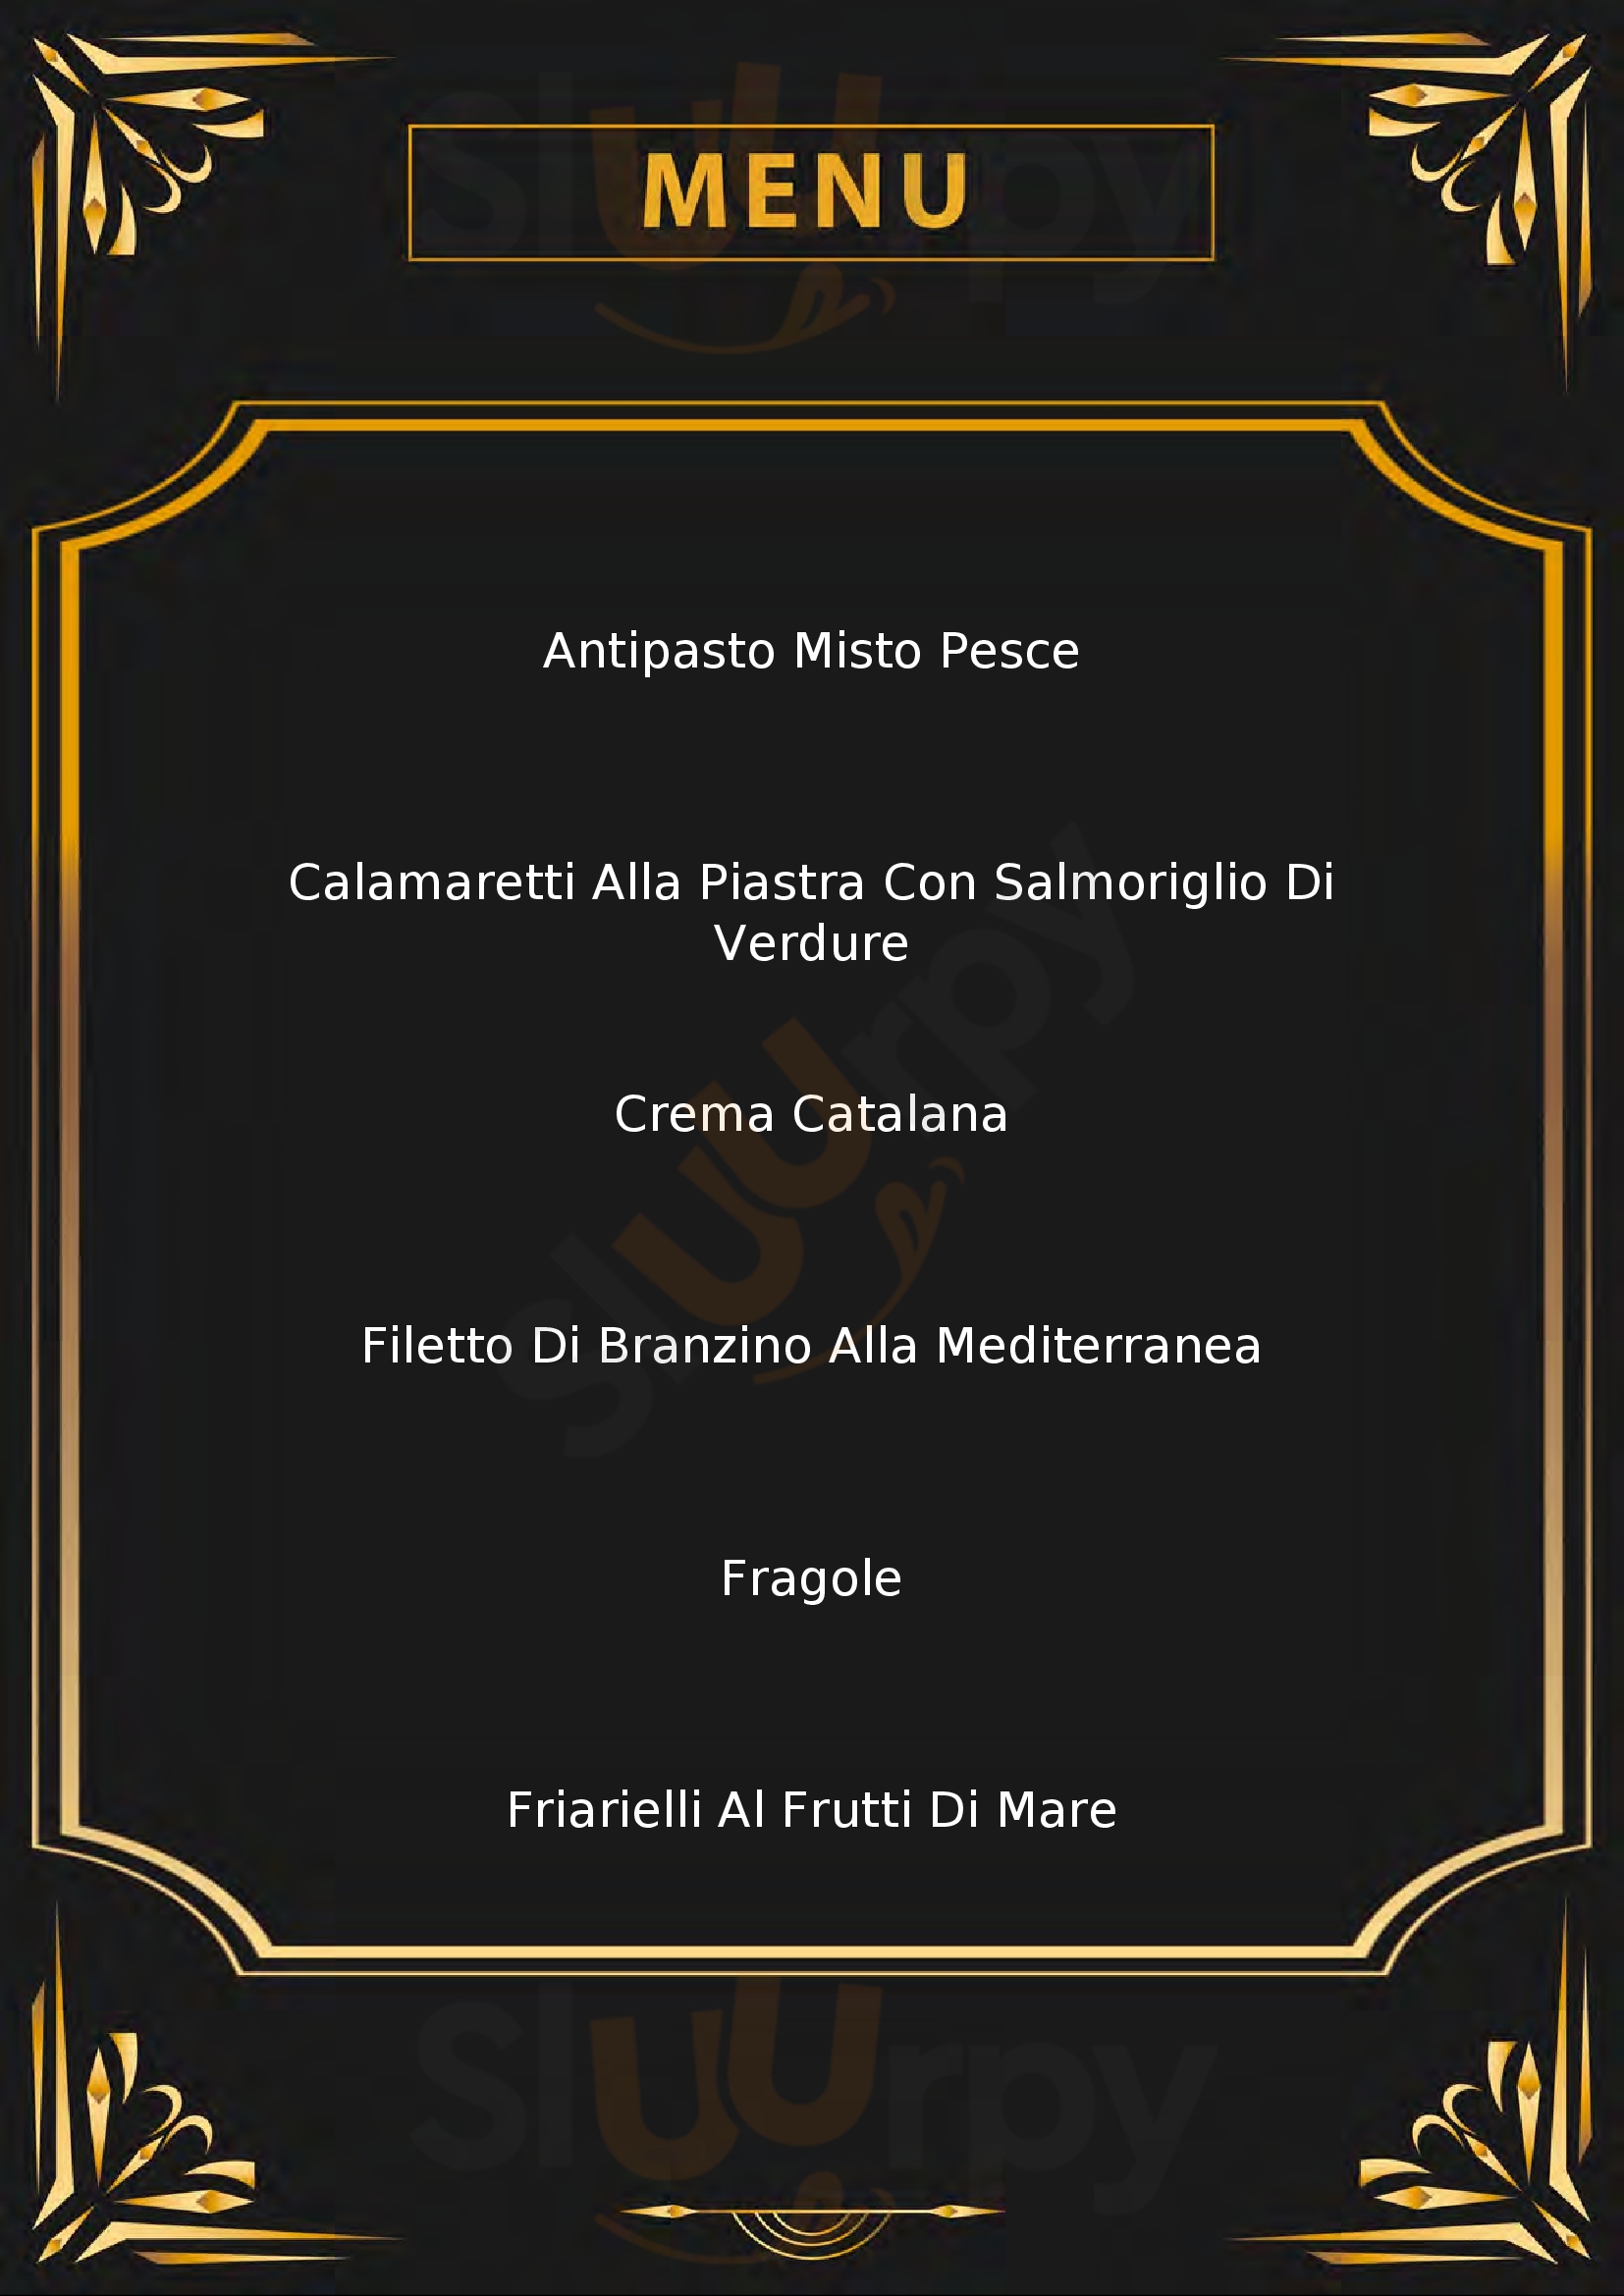 Ristorante Pizzeria Capri’ Pontenure menù 1 pagina